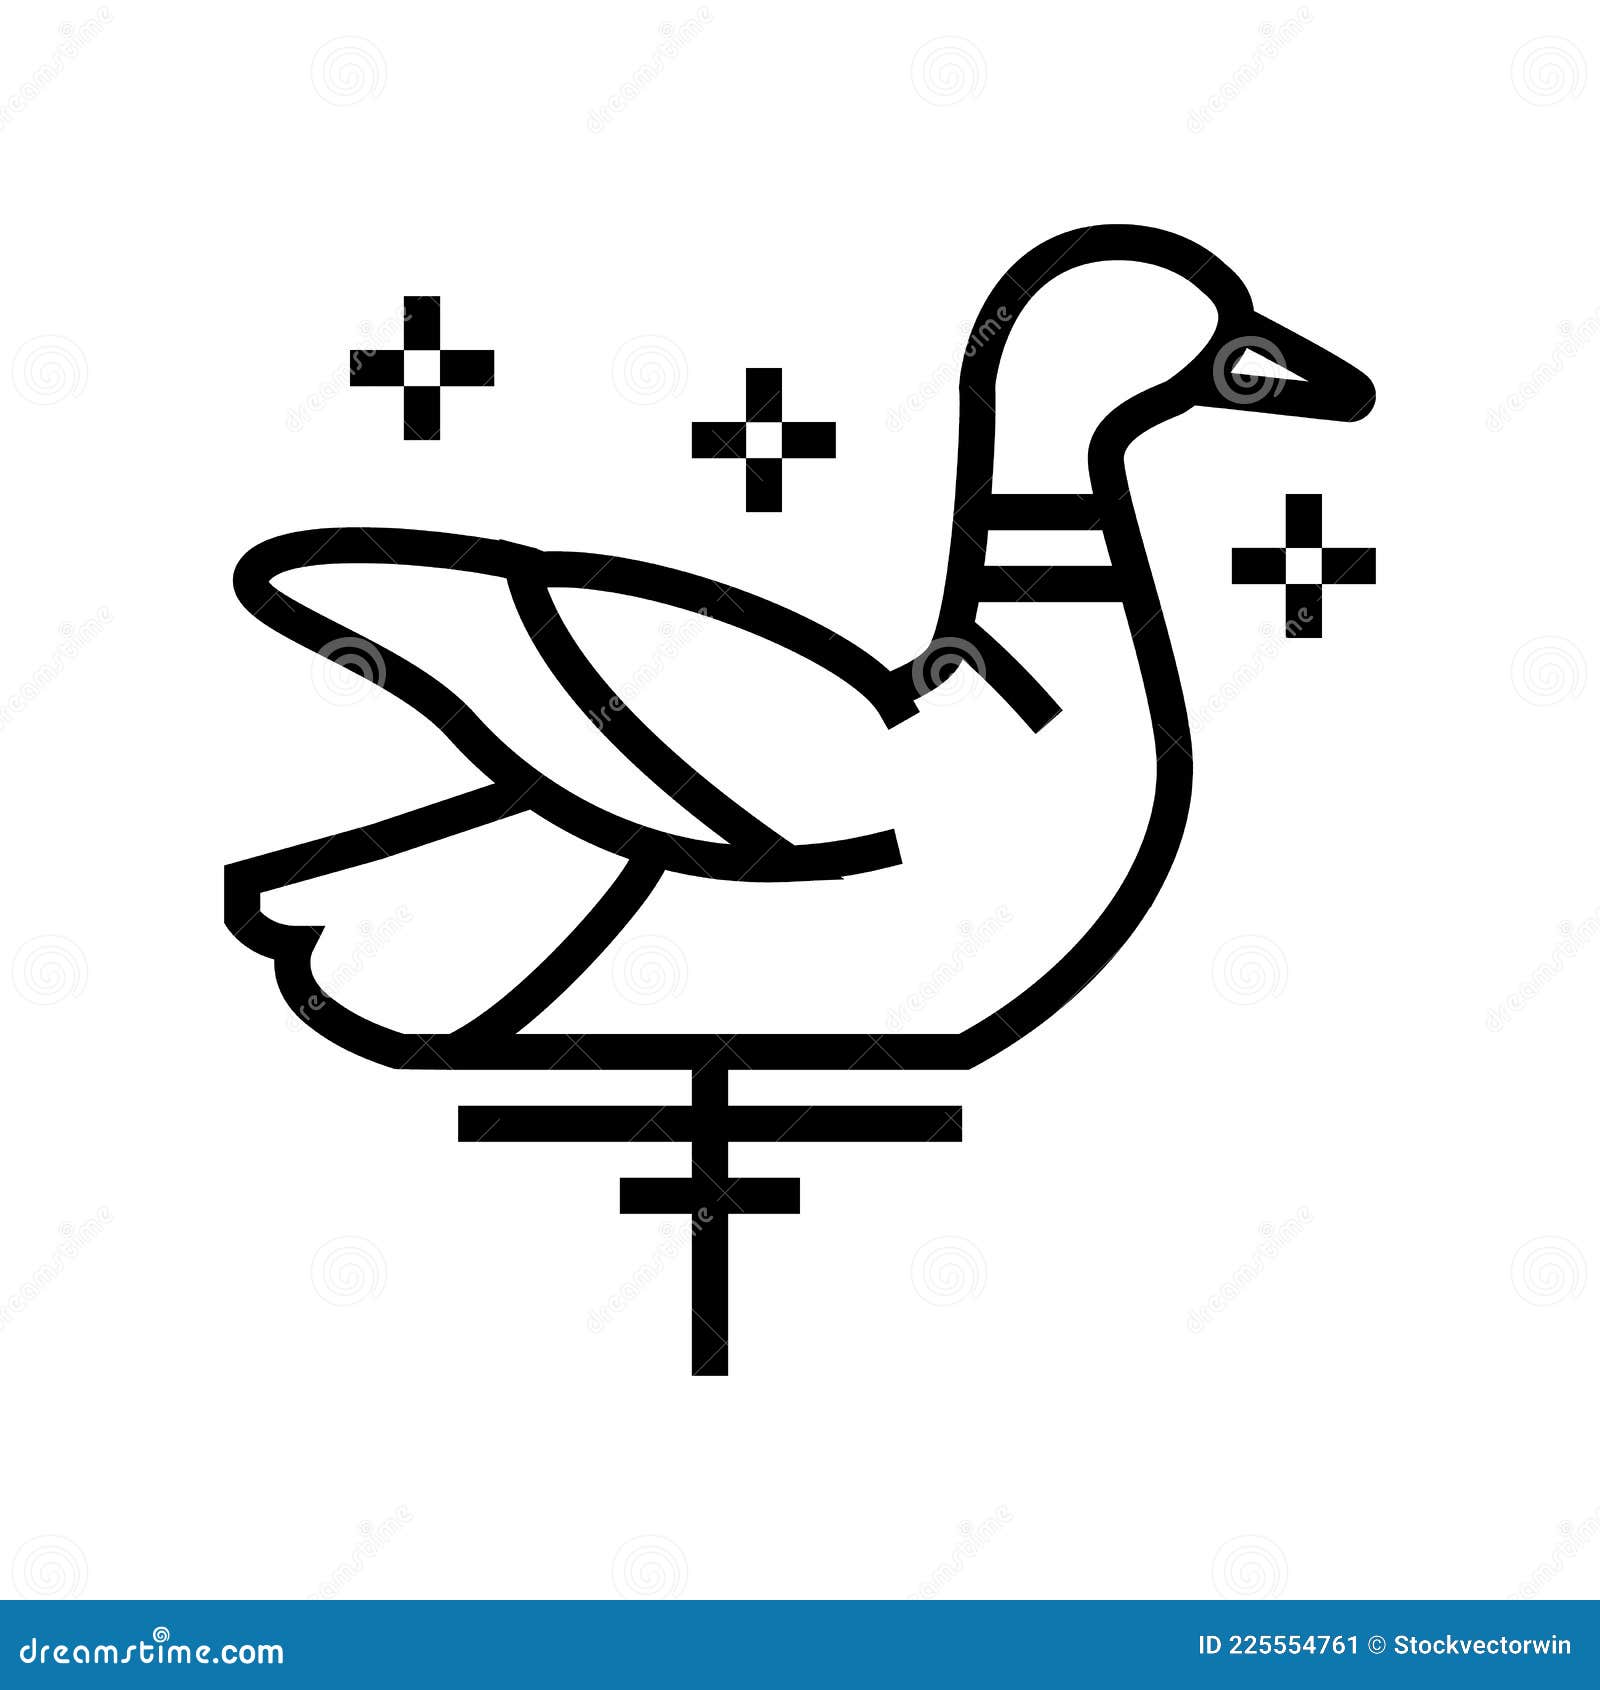 https://thumbs.dreamstime.com/z/stuffed-decoy-duck-line-icon-vector-illustration-stuffed-decoy-duck-line-icon-vector-stuffed-decoy-duck-sign-isolated-225554761.jpg